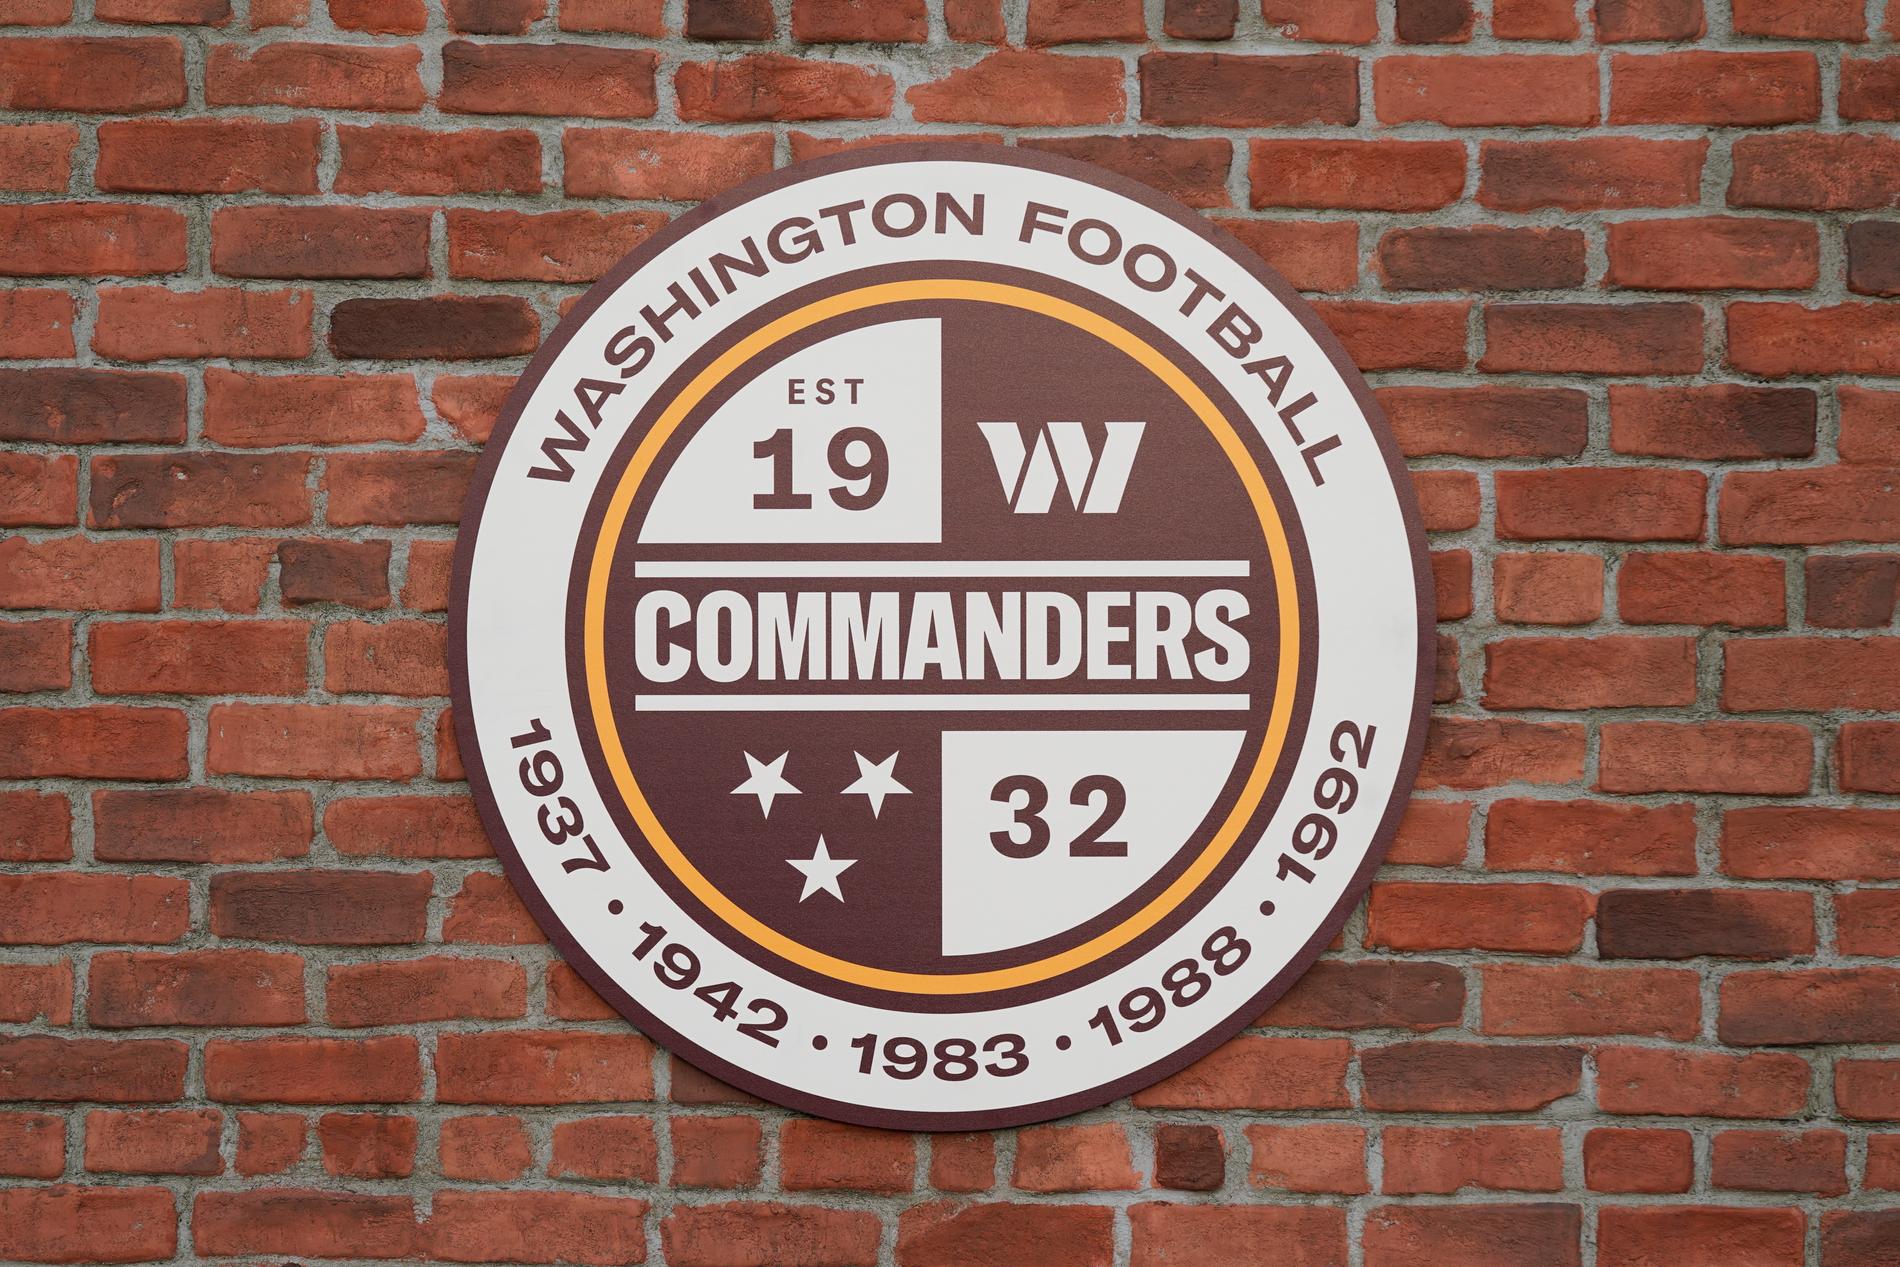 Washington Football Team blir nu Washinton Commanders. 